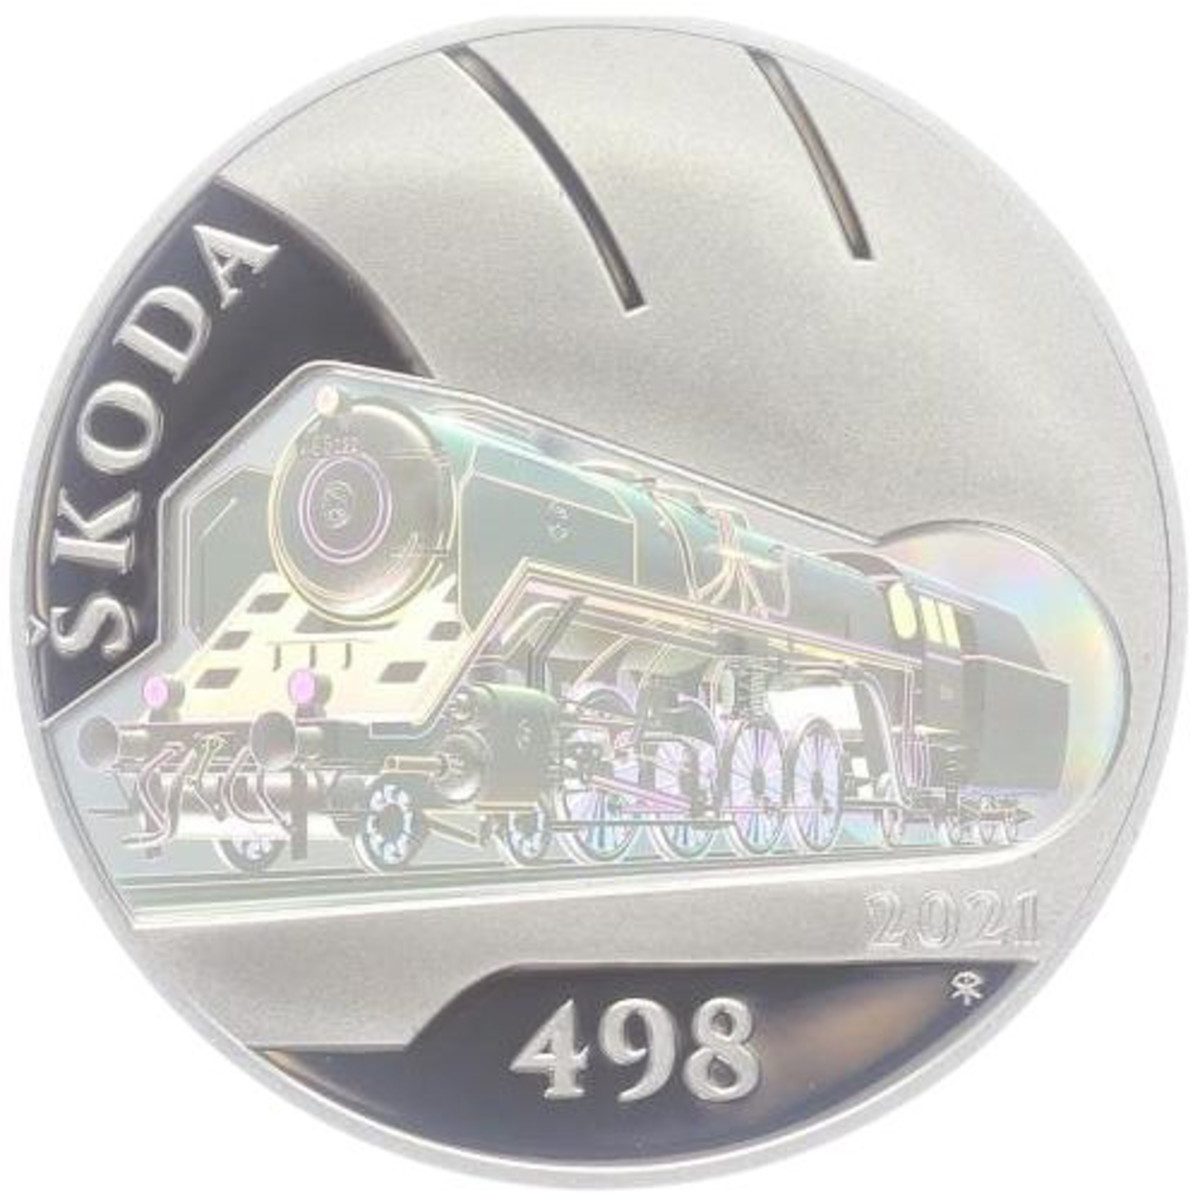 A holographic locomotive is featured on a Czech Republic 500 koruna coin. (Image courtesy Czech Mint.)